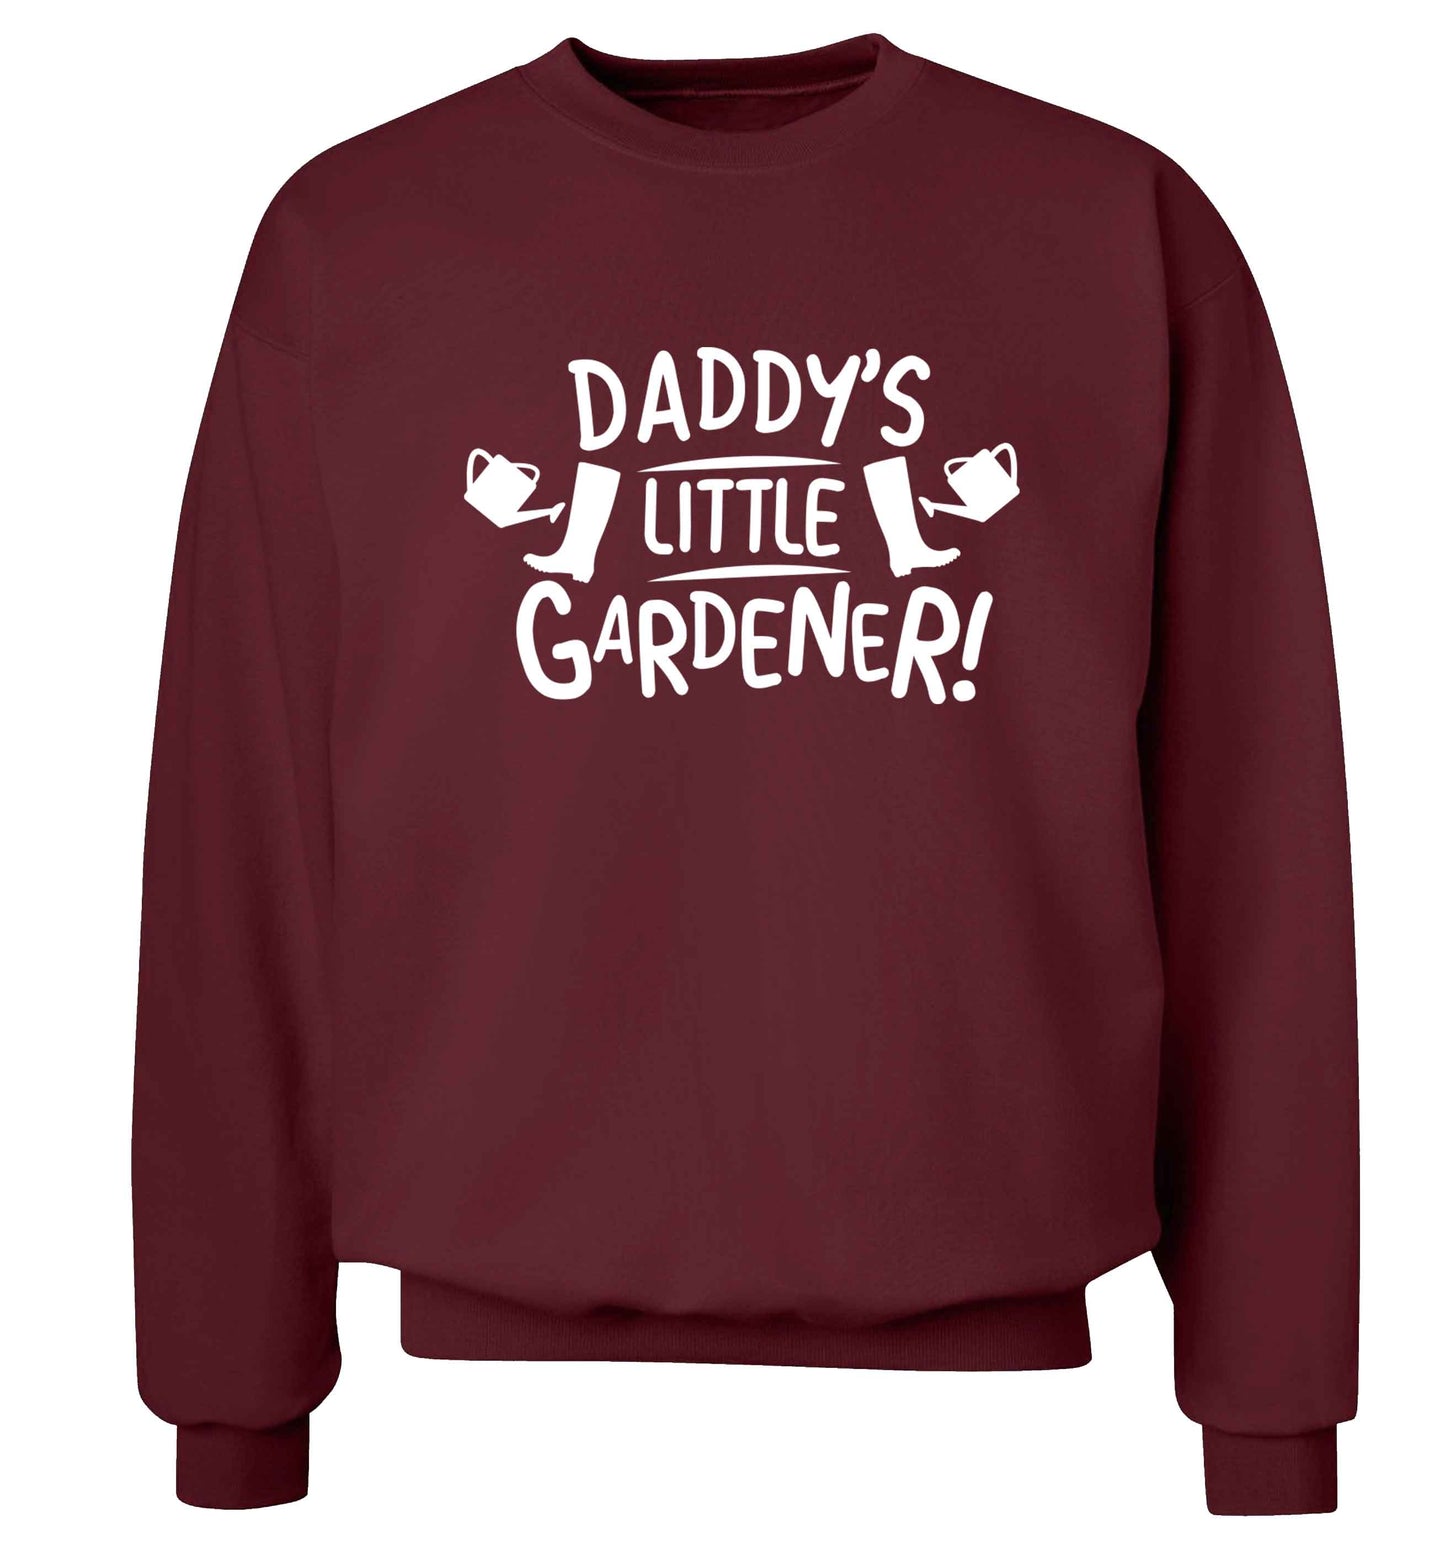 Daddy's little gardener Adult's unisex maroon Sweater 2XL